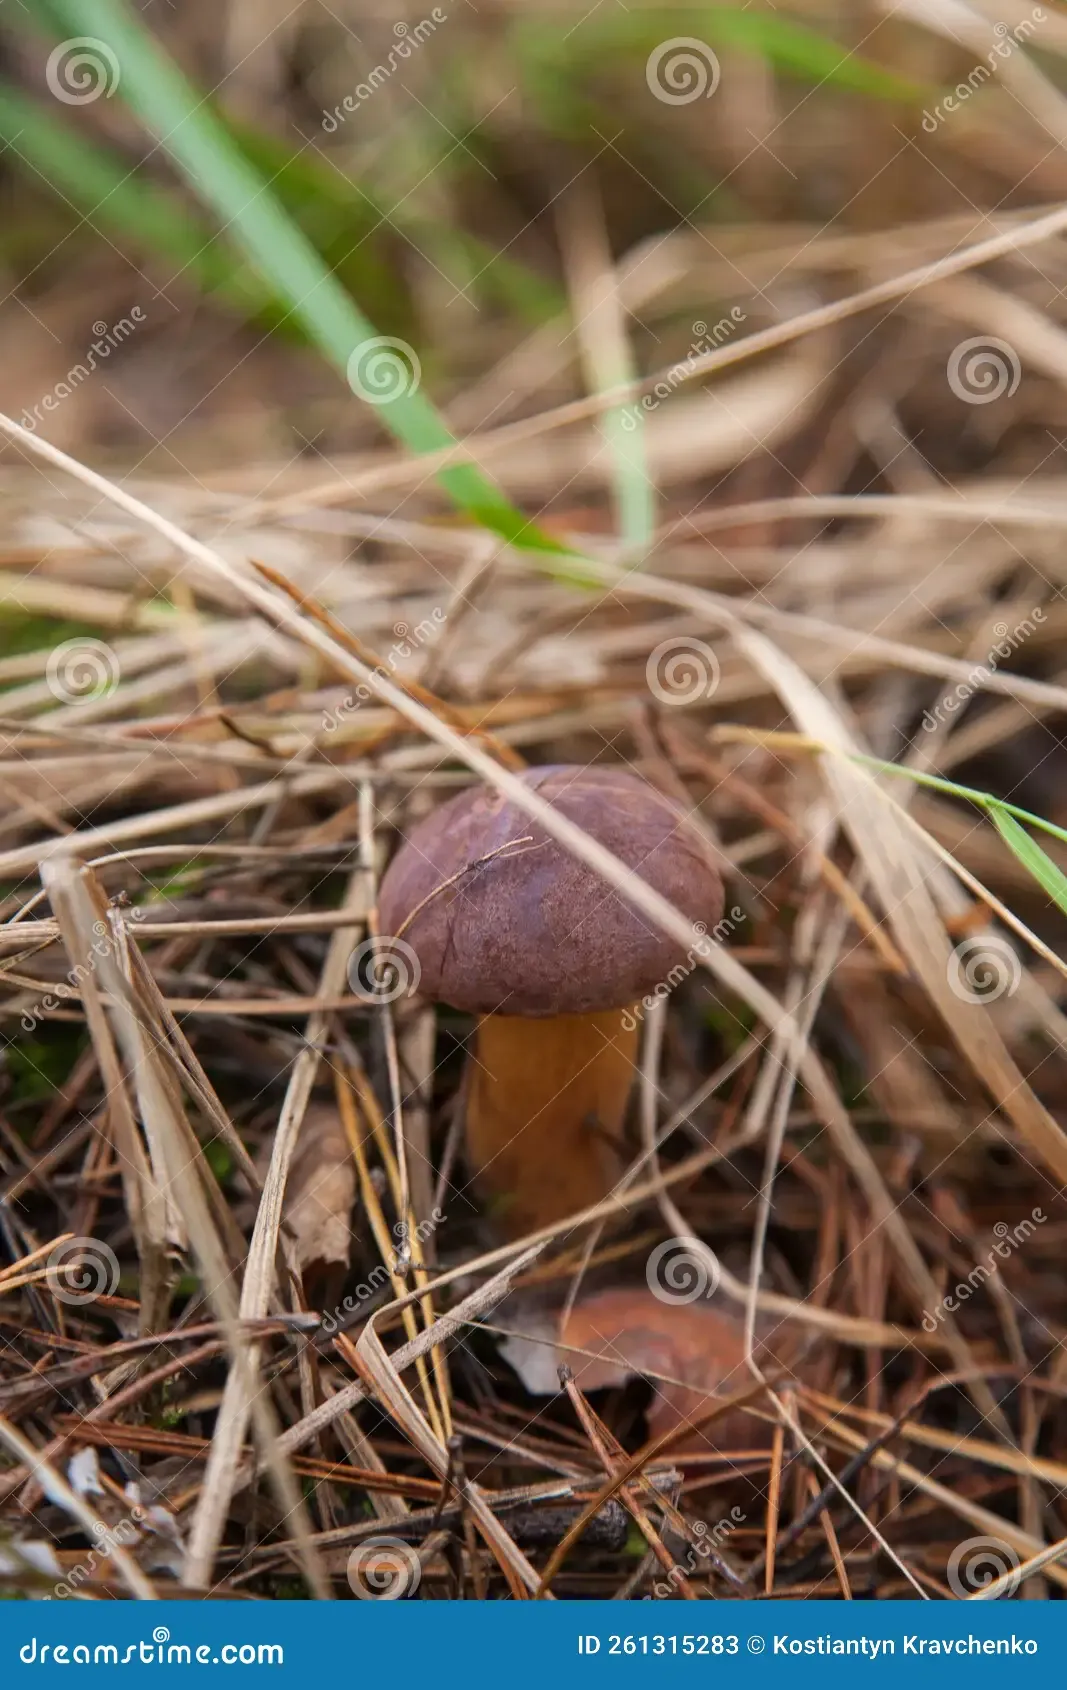 imleria-badia-boletus-badius-commonly-known-as-bay-bolete-growing-forest-floor-autumn-season-close-up-view-261315283.jpg